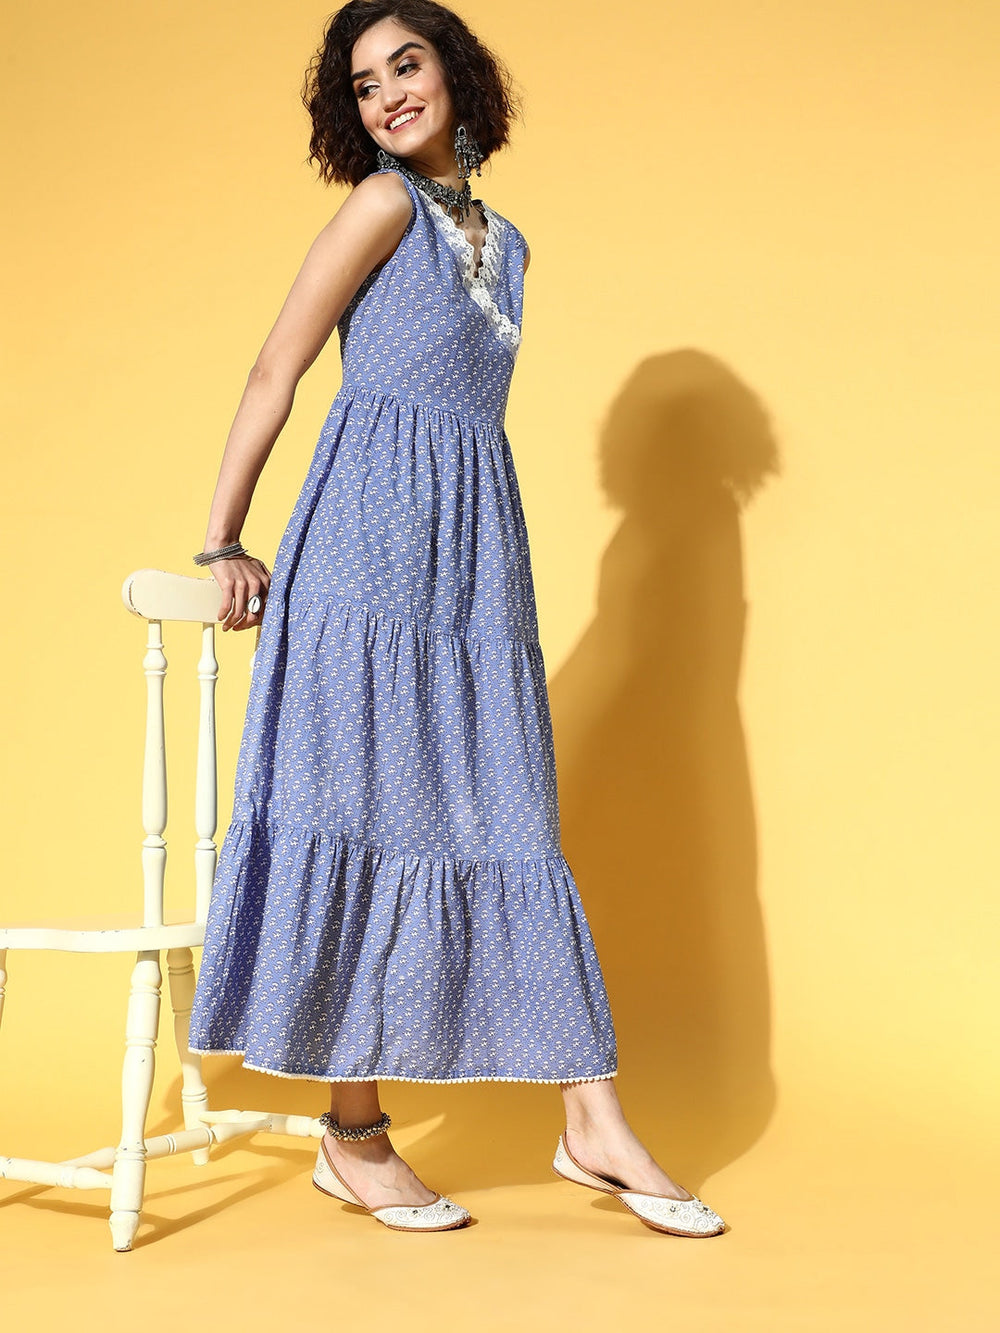 Blue Ethnic Printed Dress-Yufta Store-9503DRSBLS